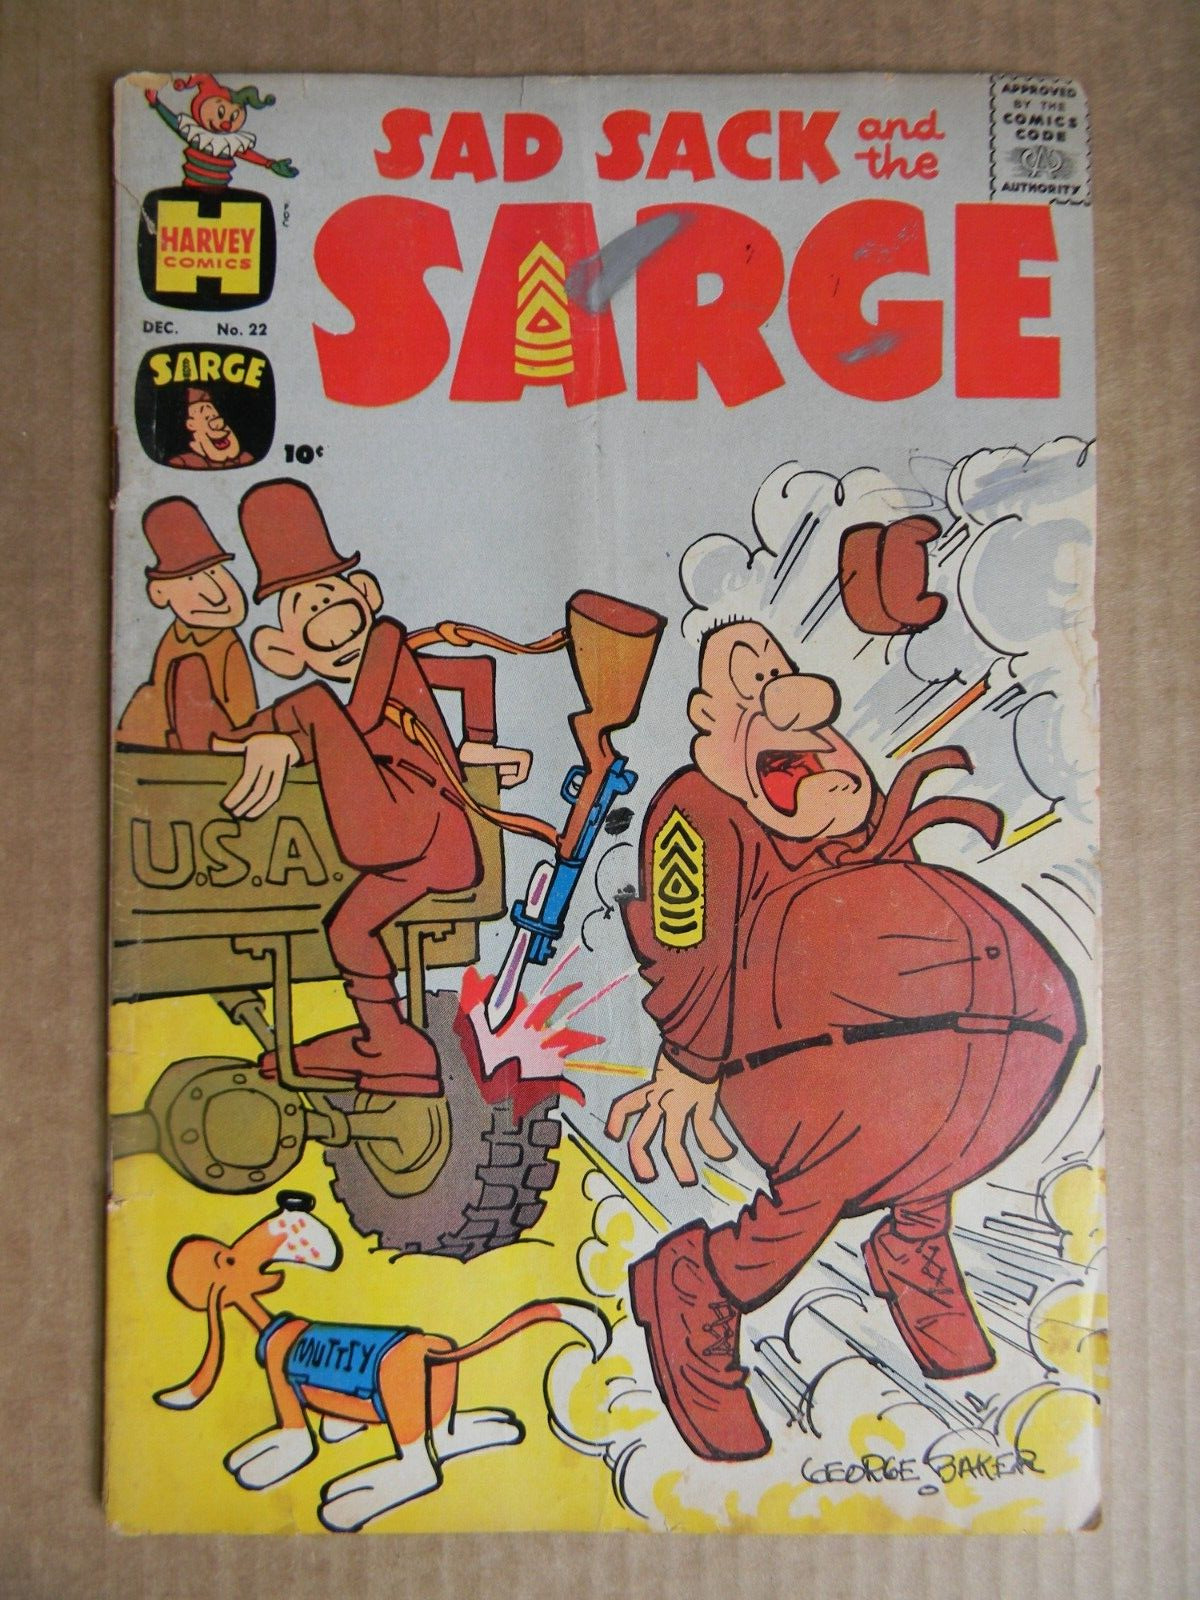 Sad Sack & Sarge #22 1960 10 cent comic US Army Rifle Bayonet Cover Toy Car Ad